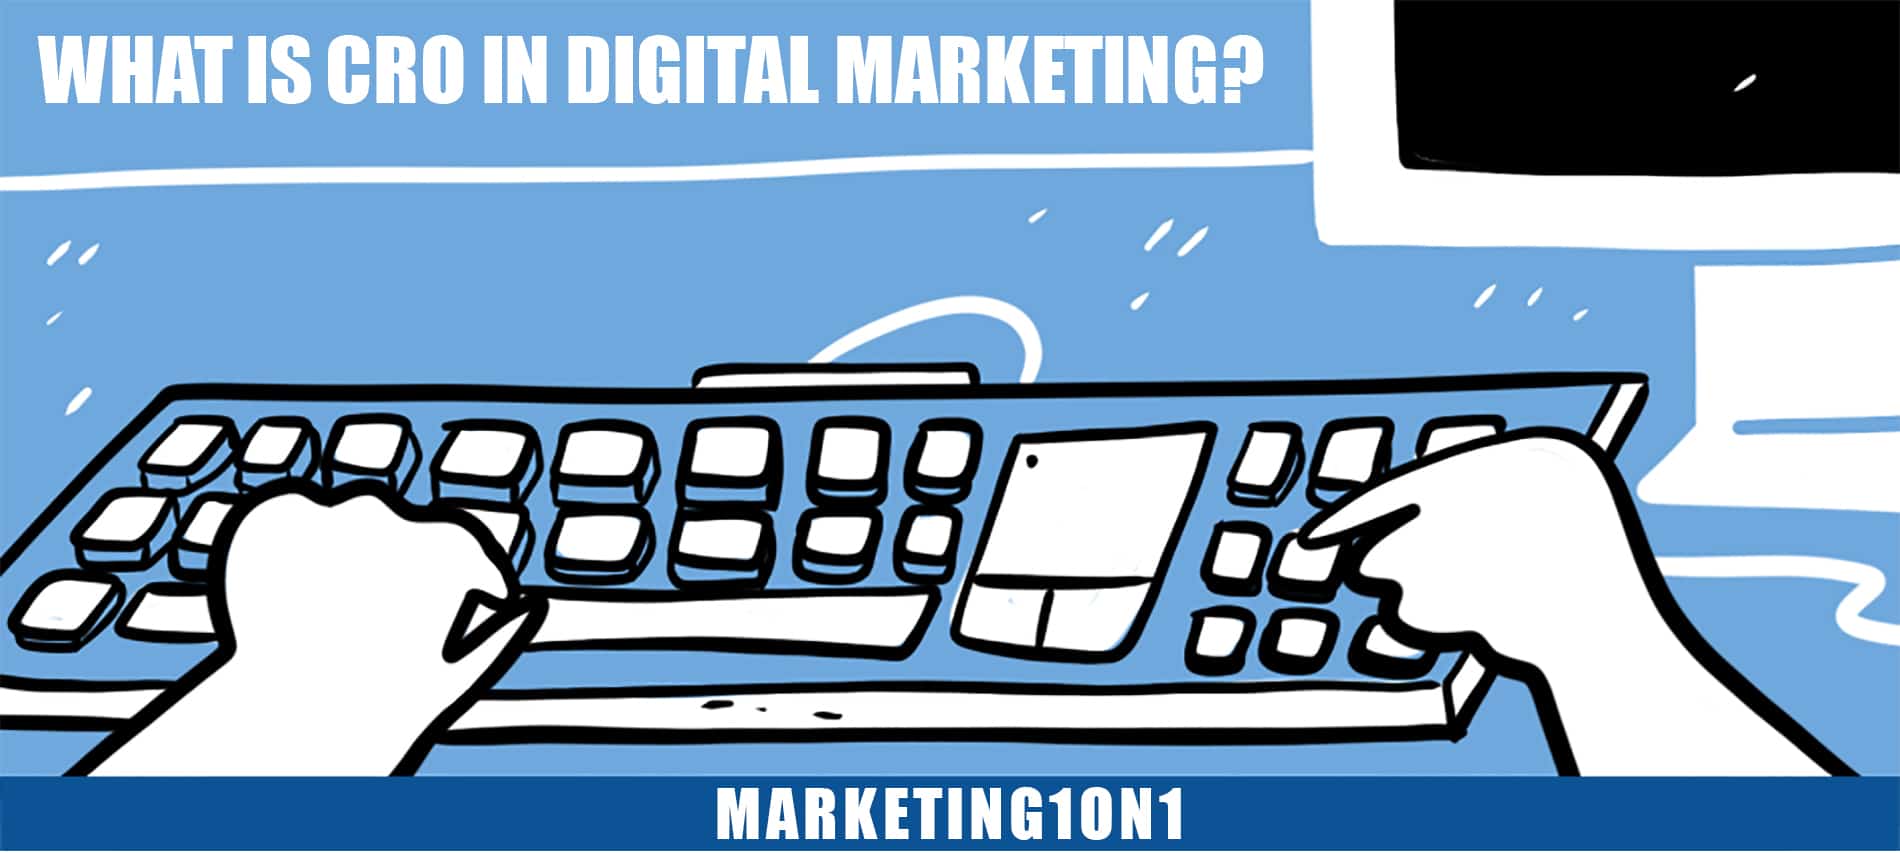 What is CRO in digital marketing?